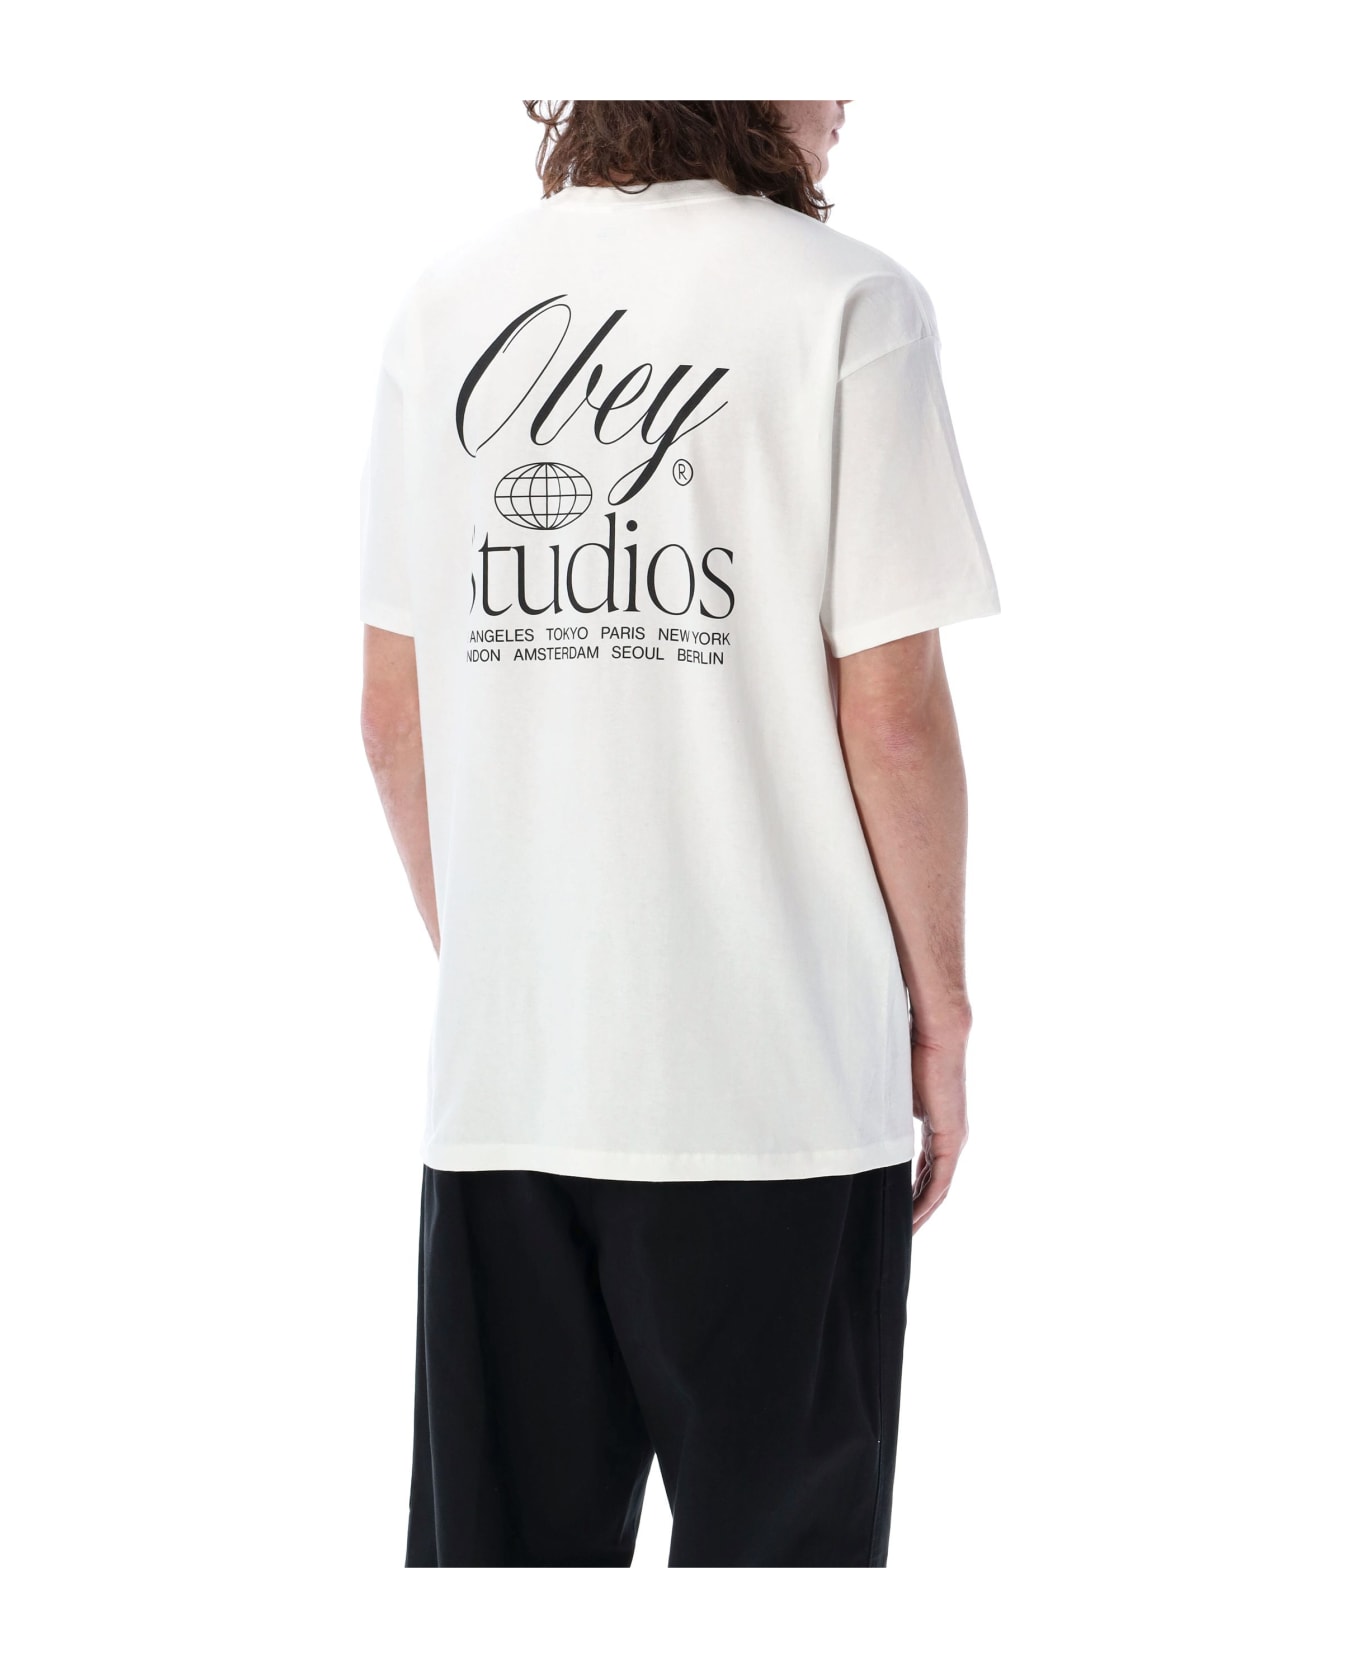 Obey Studios Worldwide T-shirt - WHITE